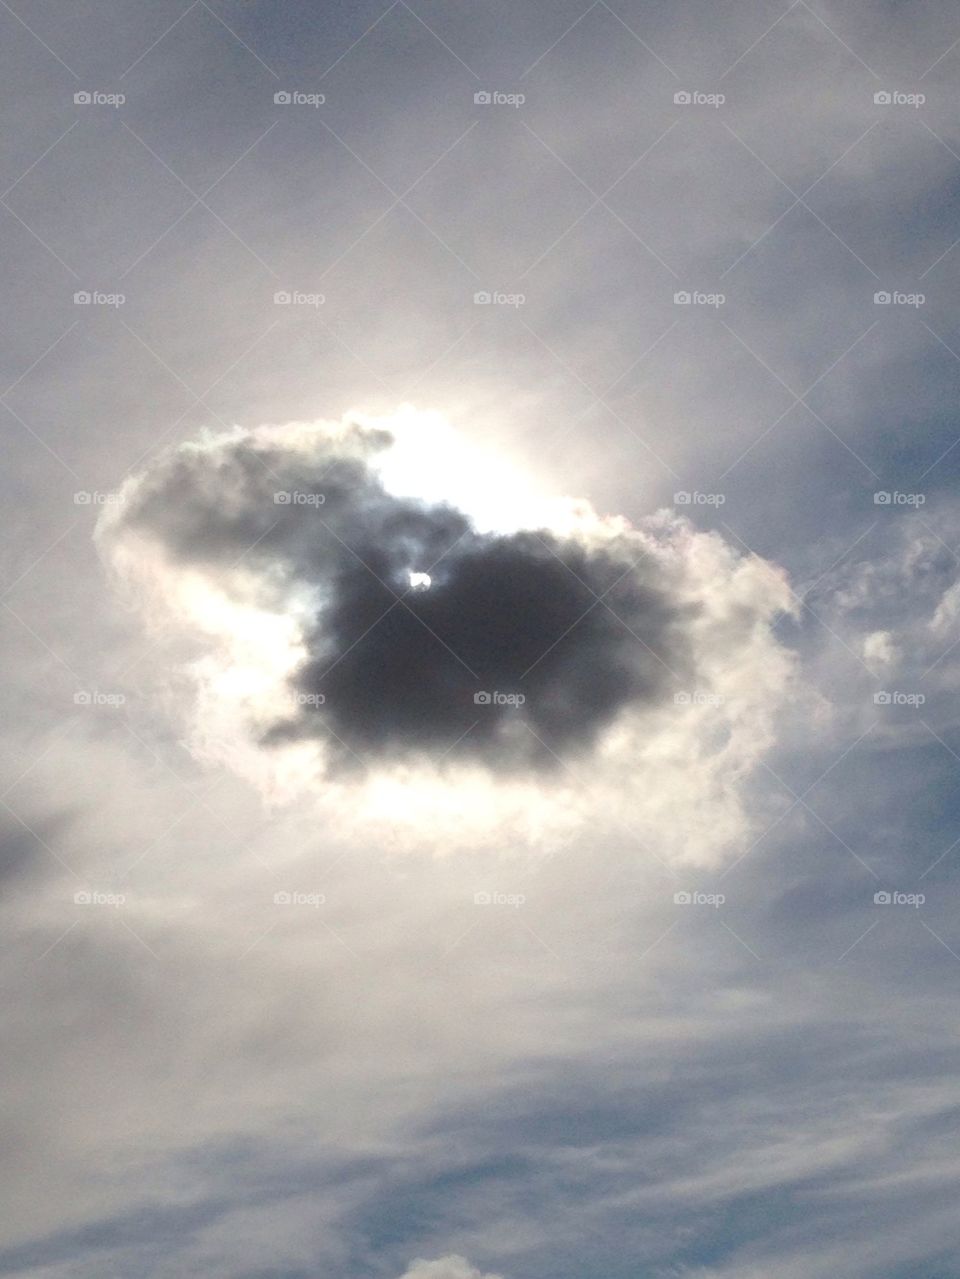 Cloud in the sky 2